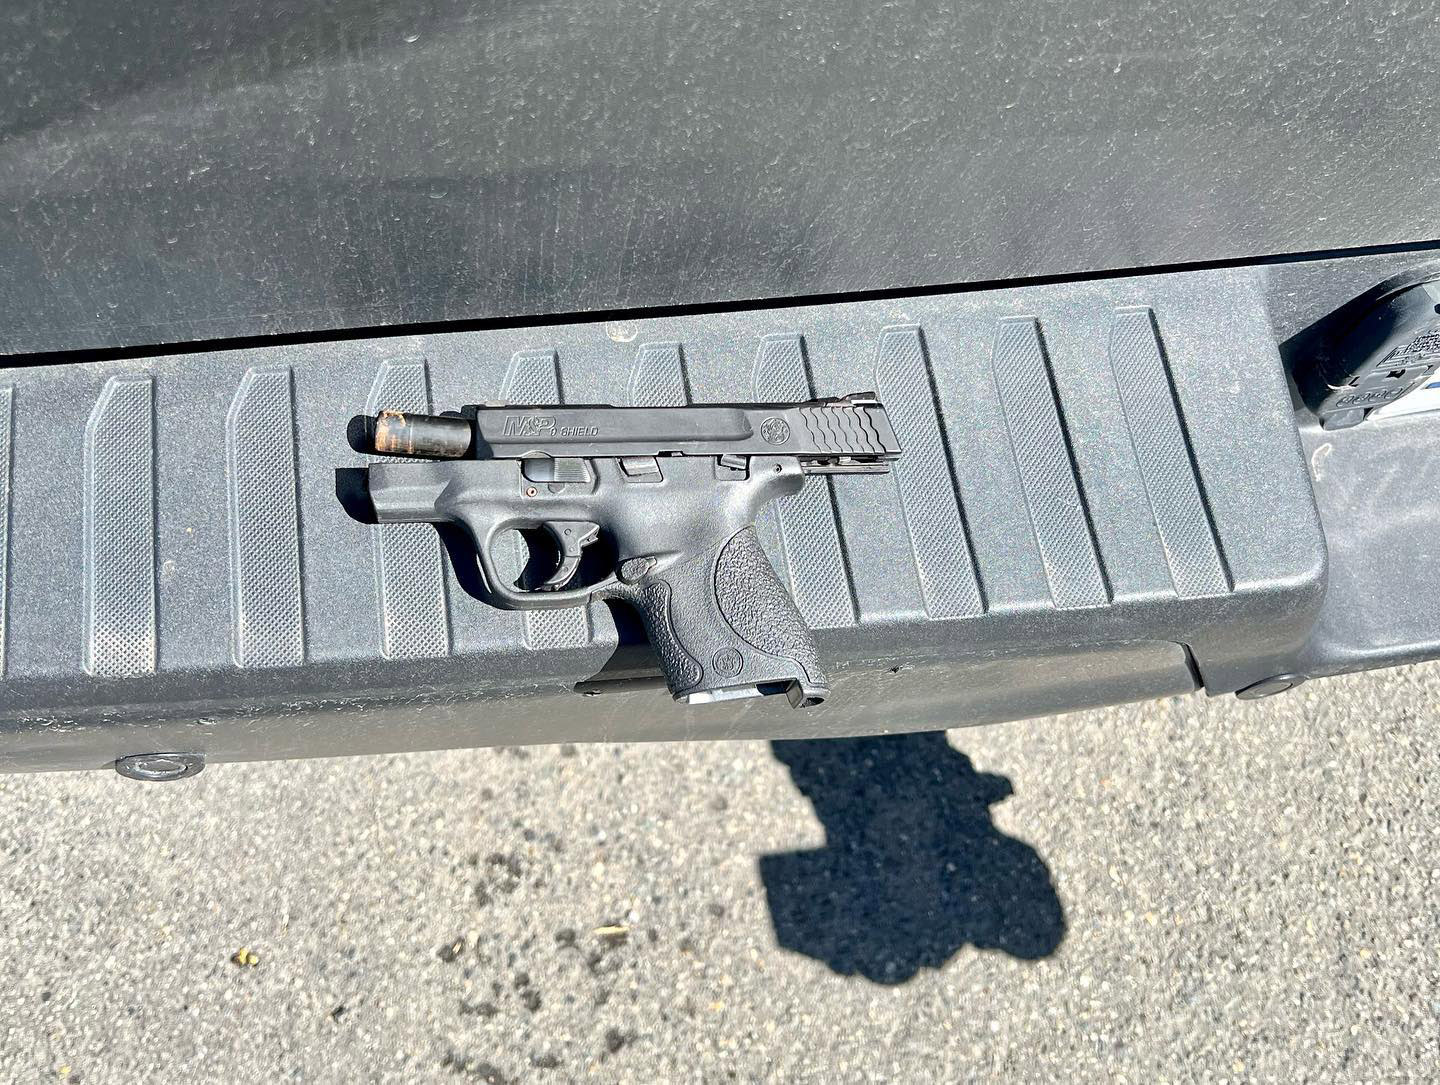 A gun was found in the truck of James MacDonald in Coronado, California, on March 22, 2023. Photo by Coronado Police Department/Facebook